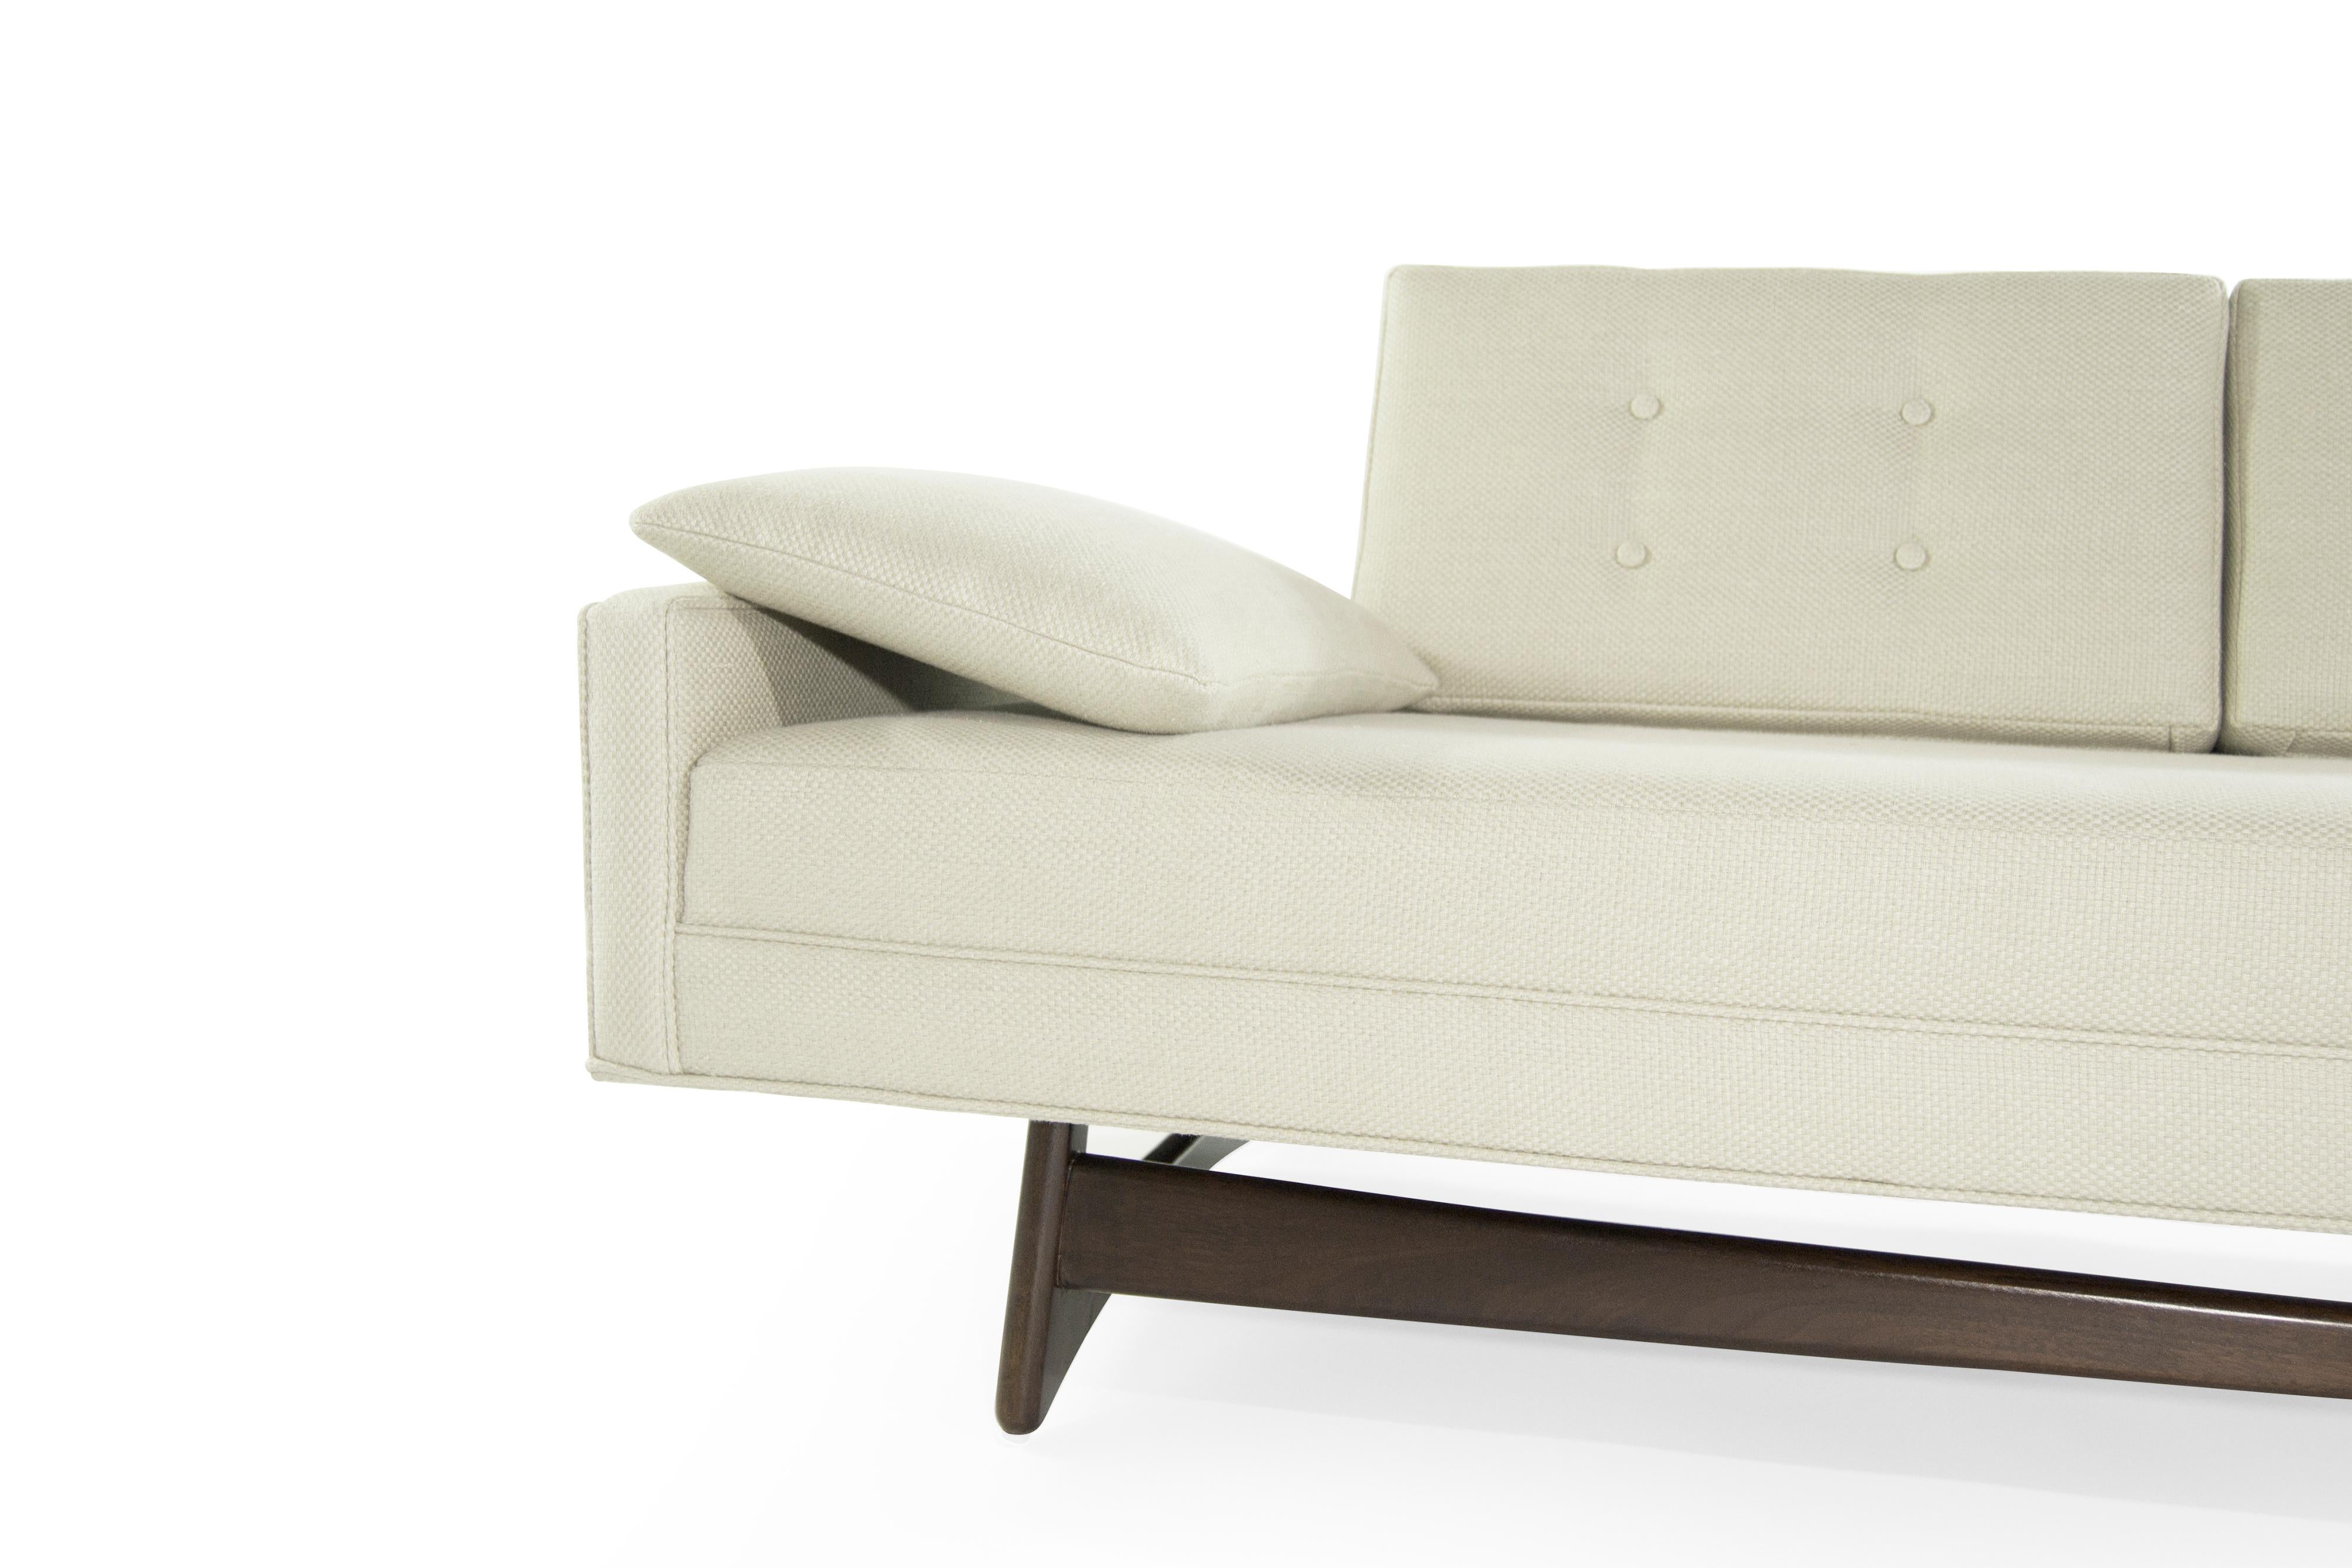 Linen Adrian Pearsall for Craft Associates Sofa, Model 2408